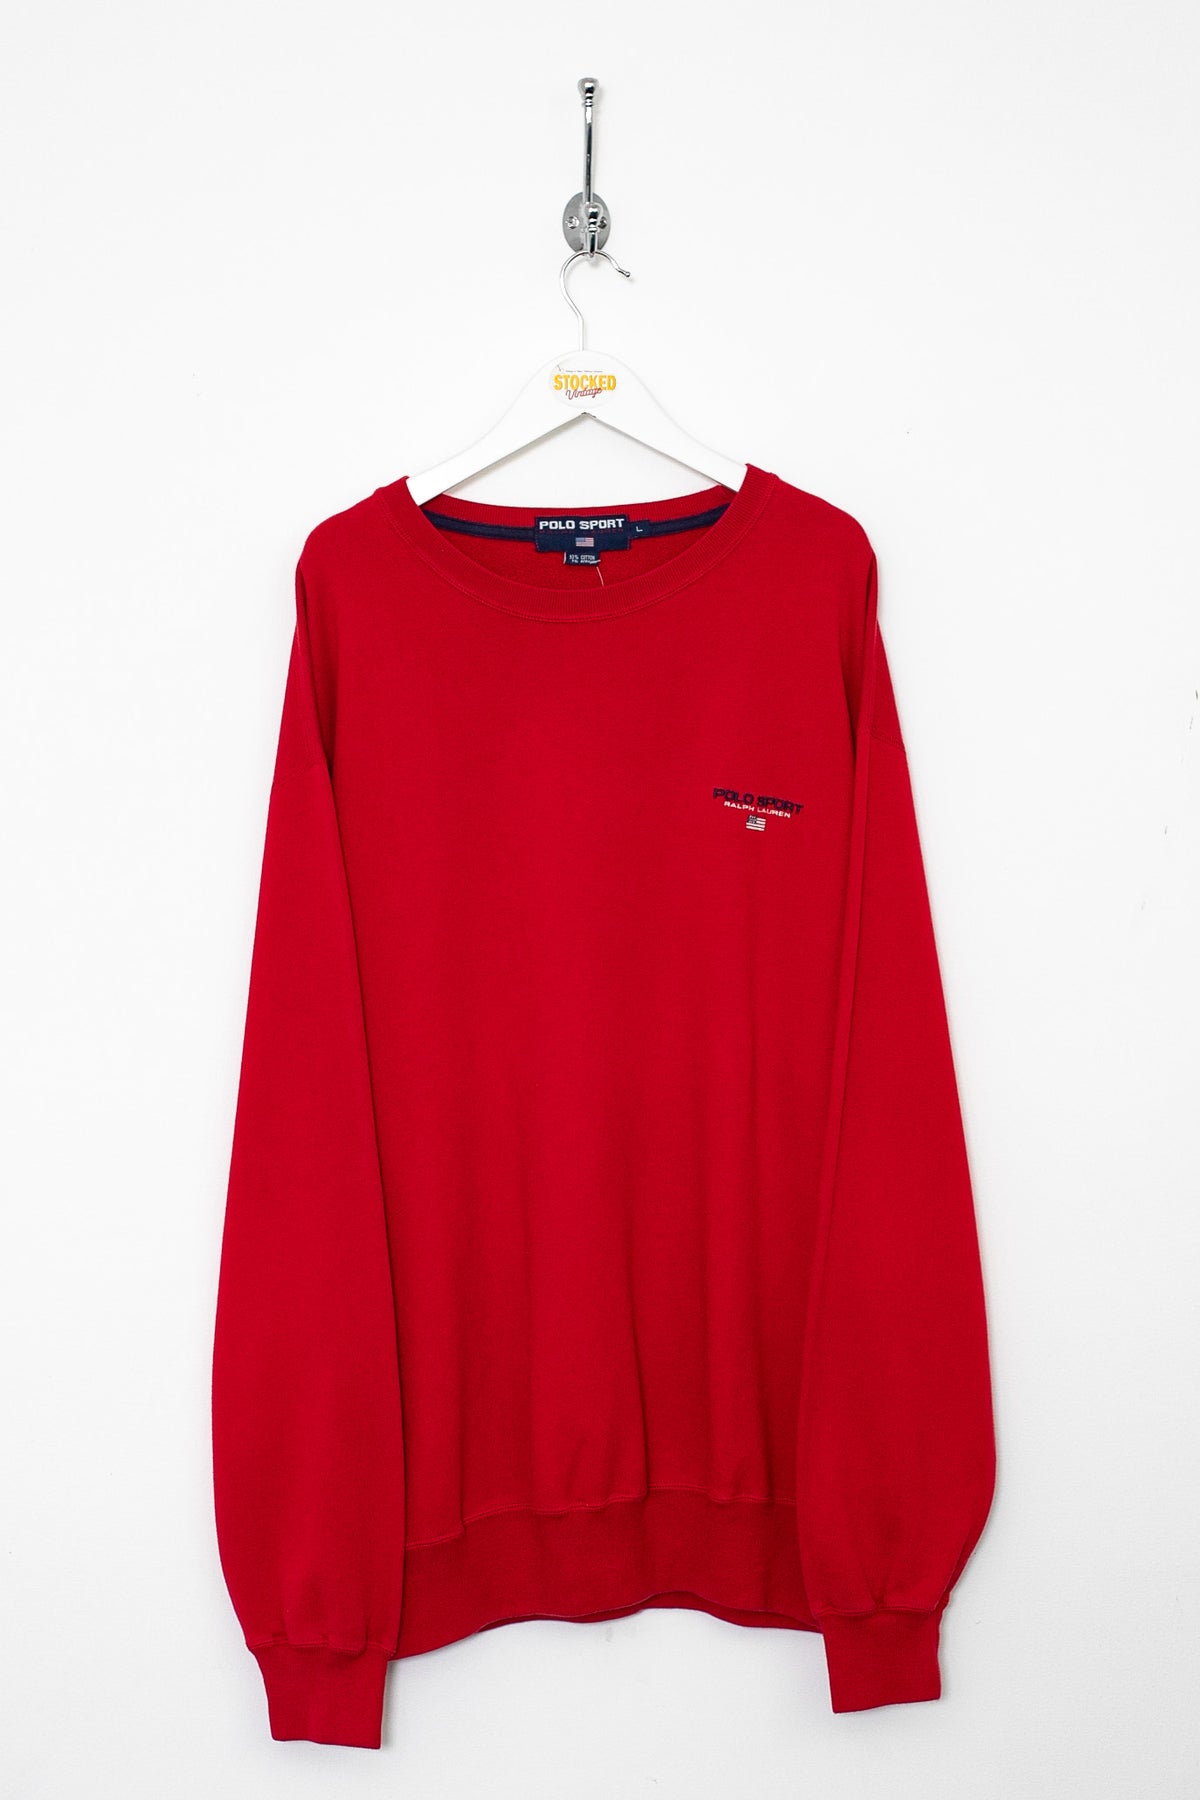 Vintage Bootleg Nautica Polo Shirt Mens XL Red Sailing 90s Long Sleeve